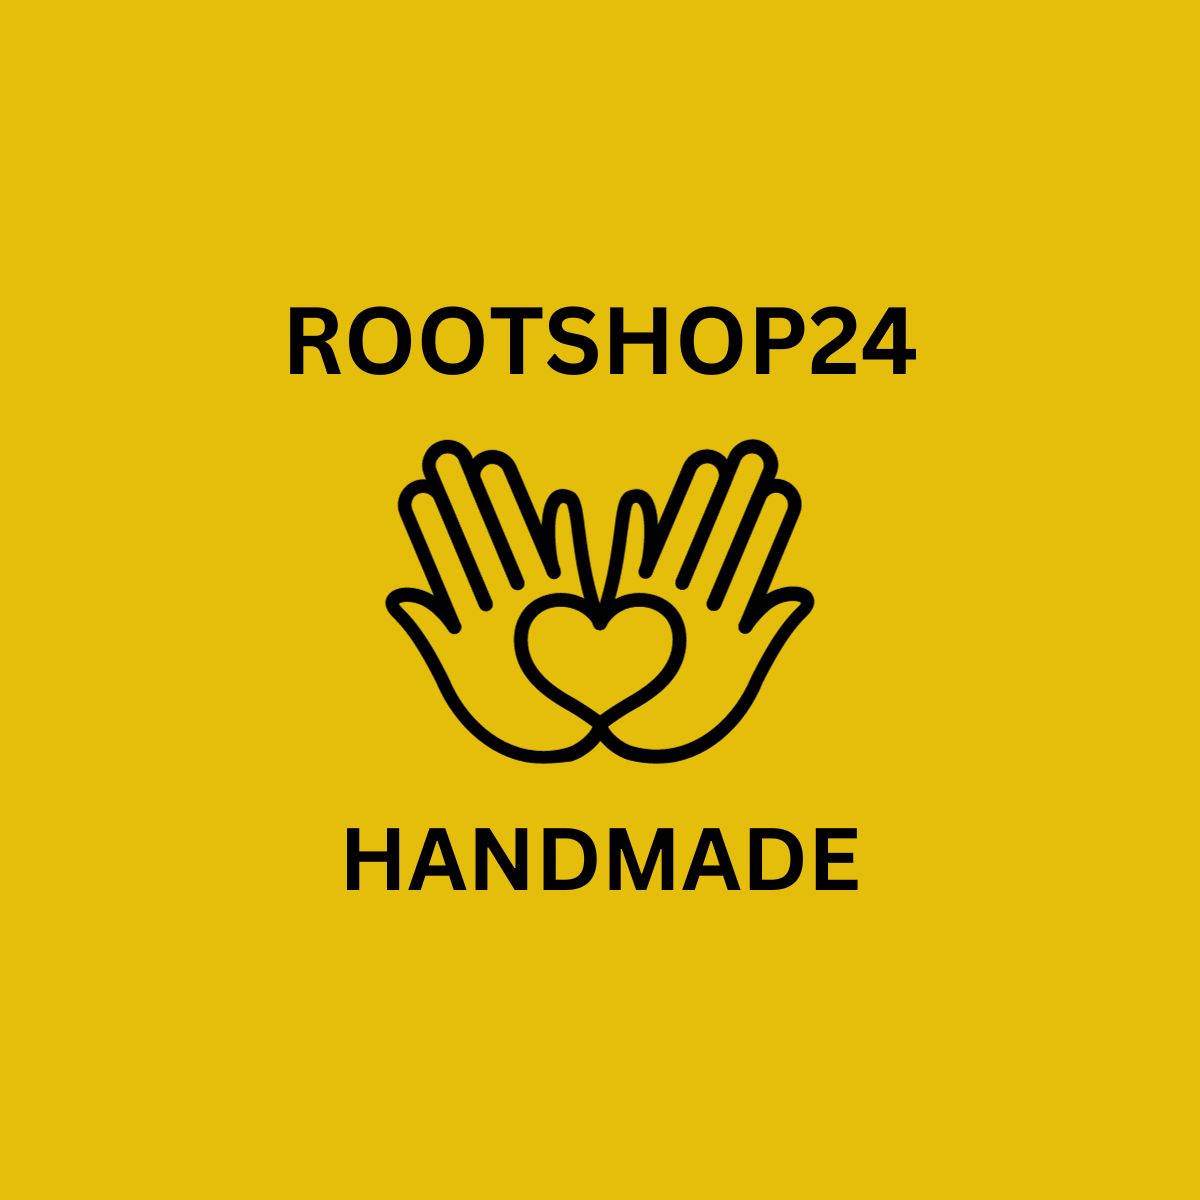 Rootshop24 Handmade